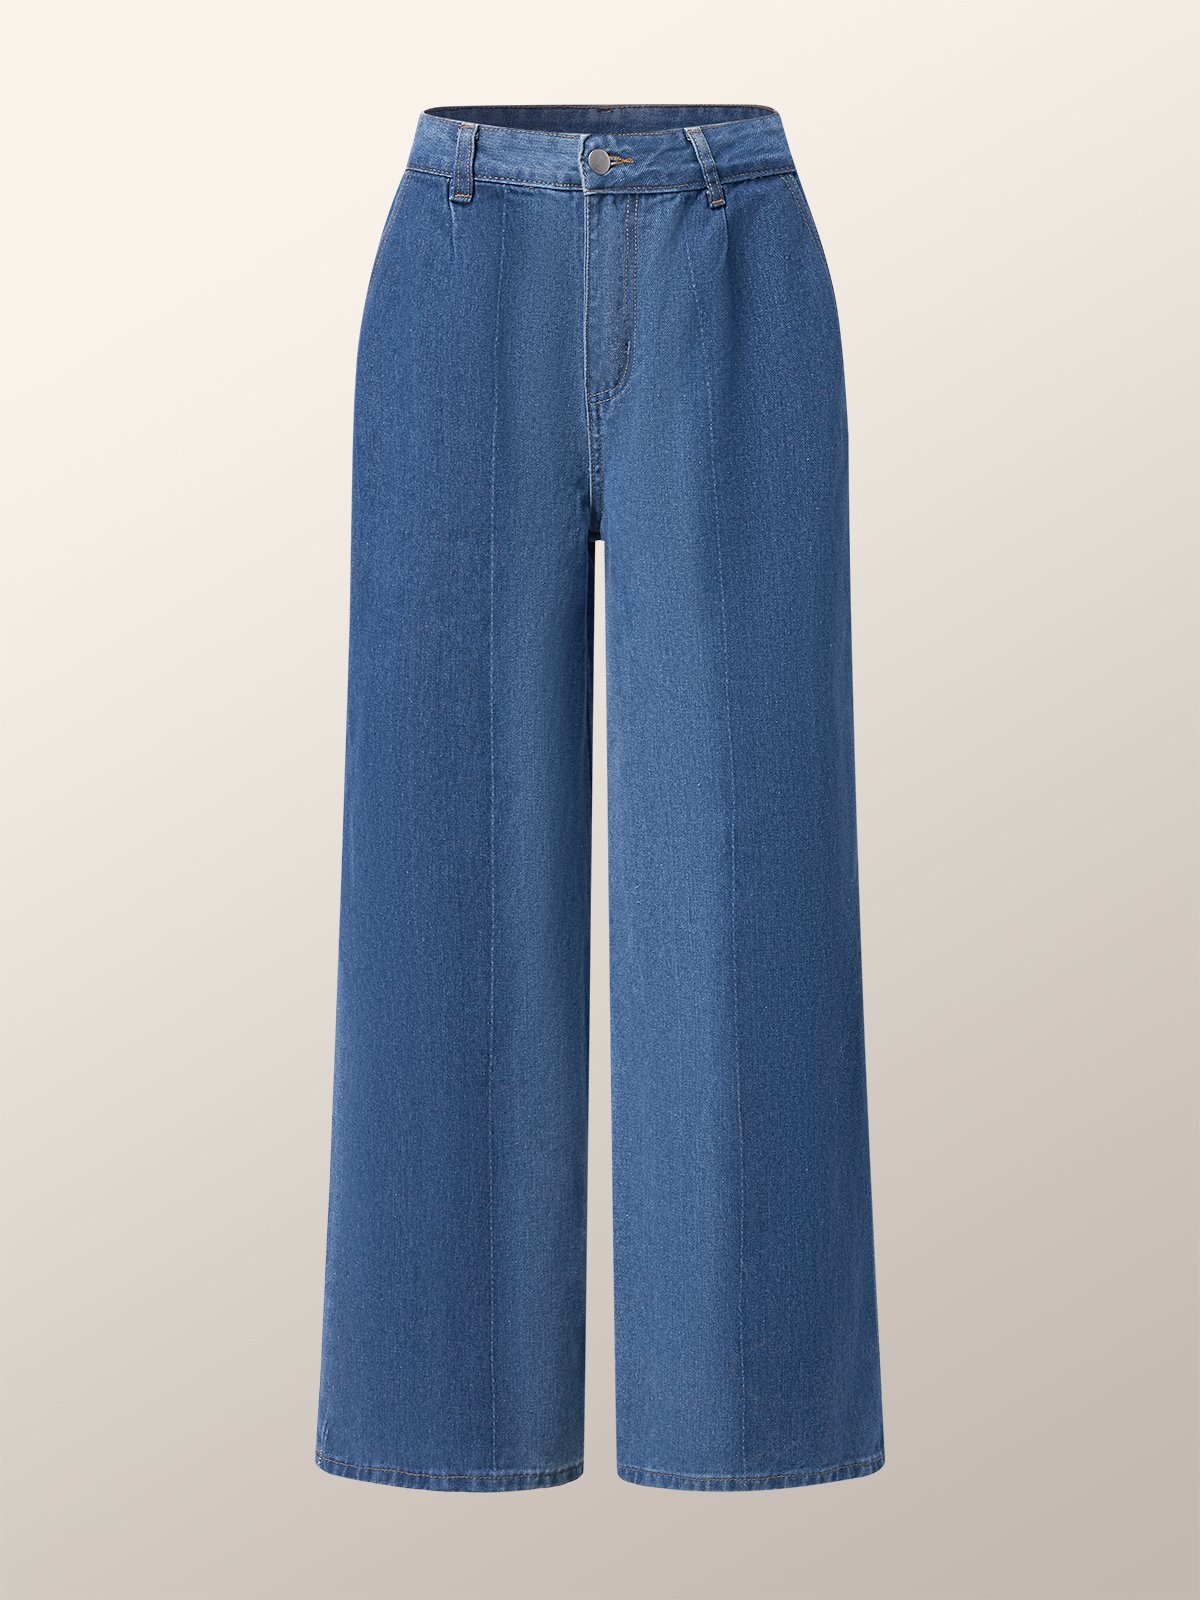 Denim Lässig Farbblock Regelmäßige Passform Jeans